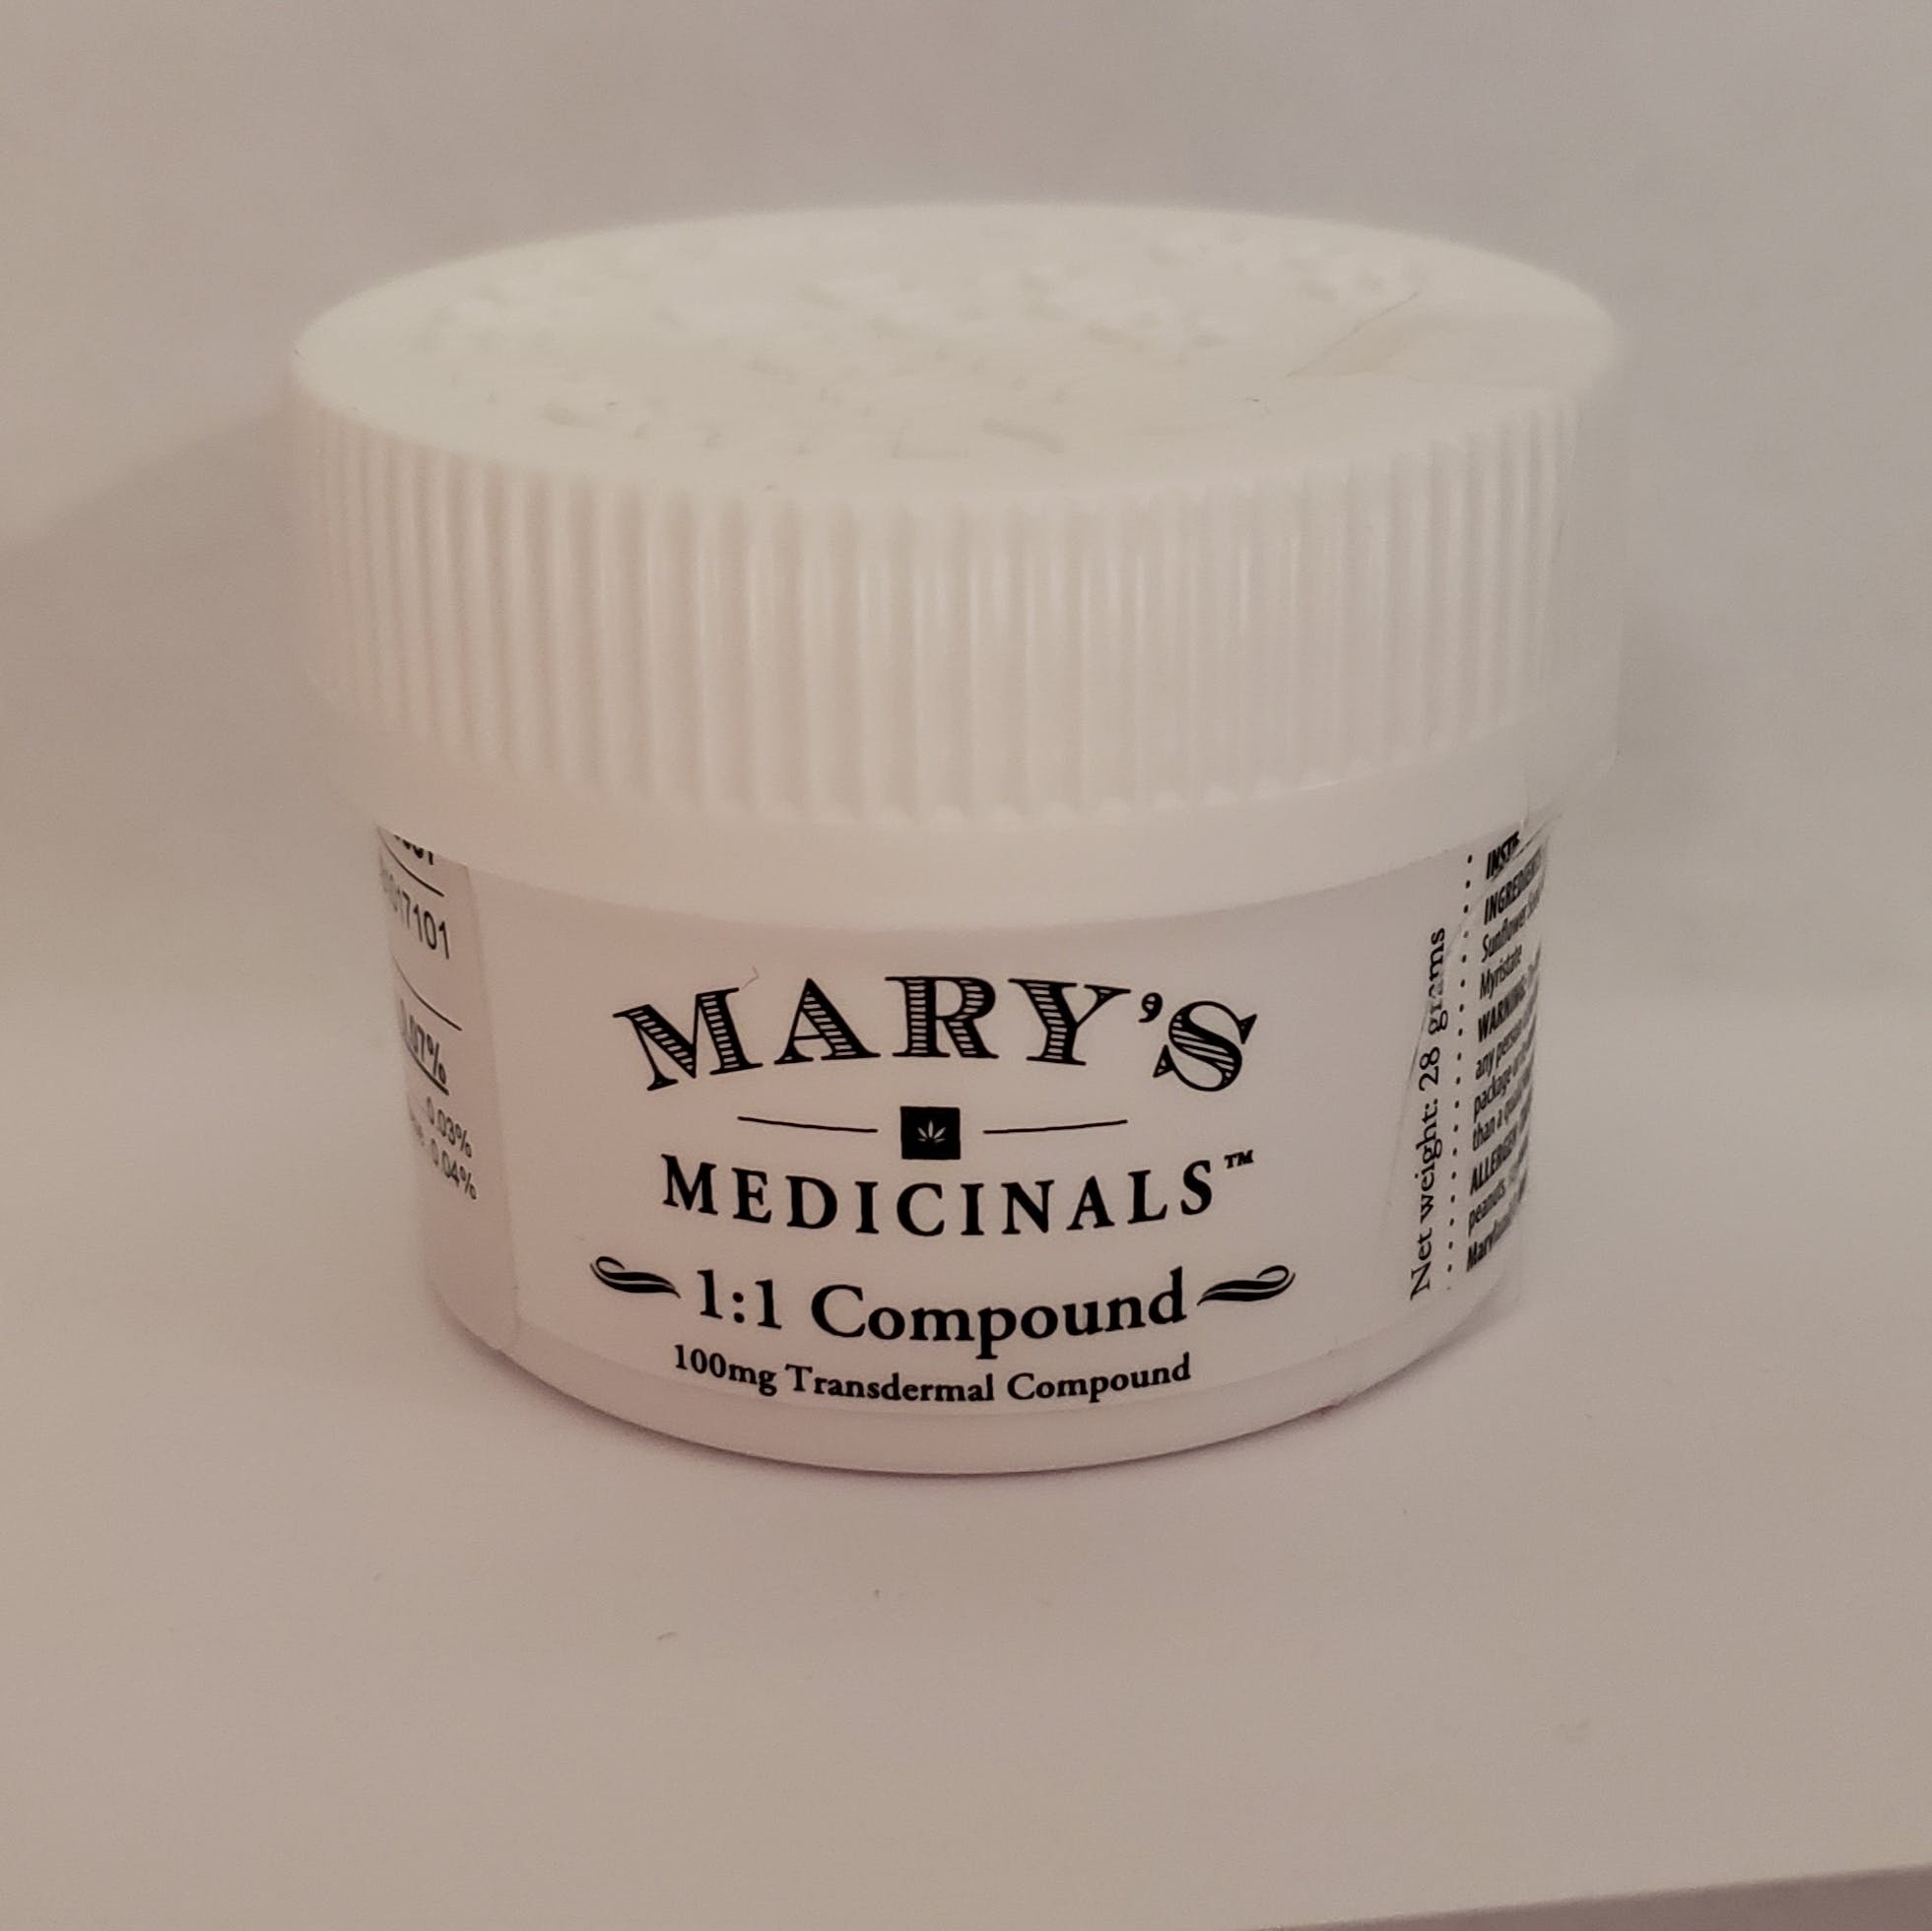 marijuana-dispensaries-12355-georgia-ave-silver-spring-marys-medicinals-compound-11-balm